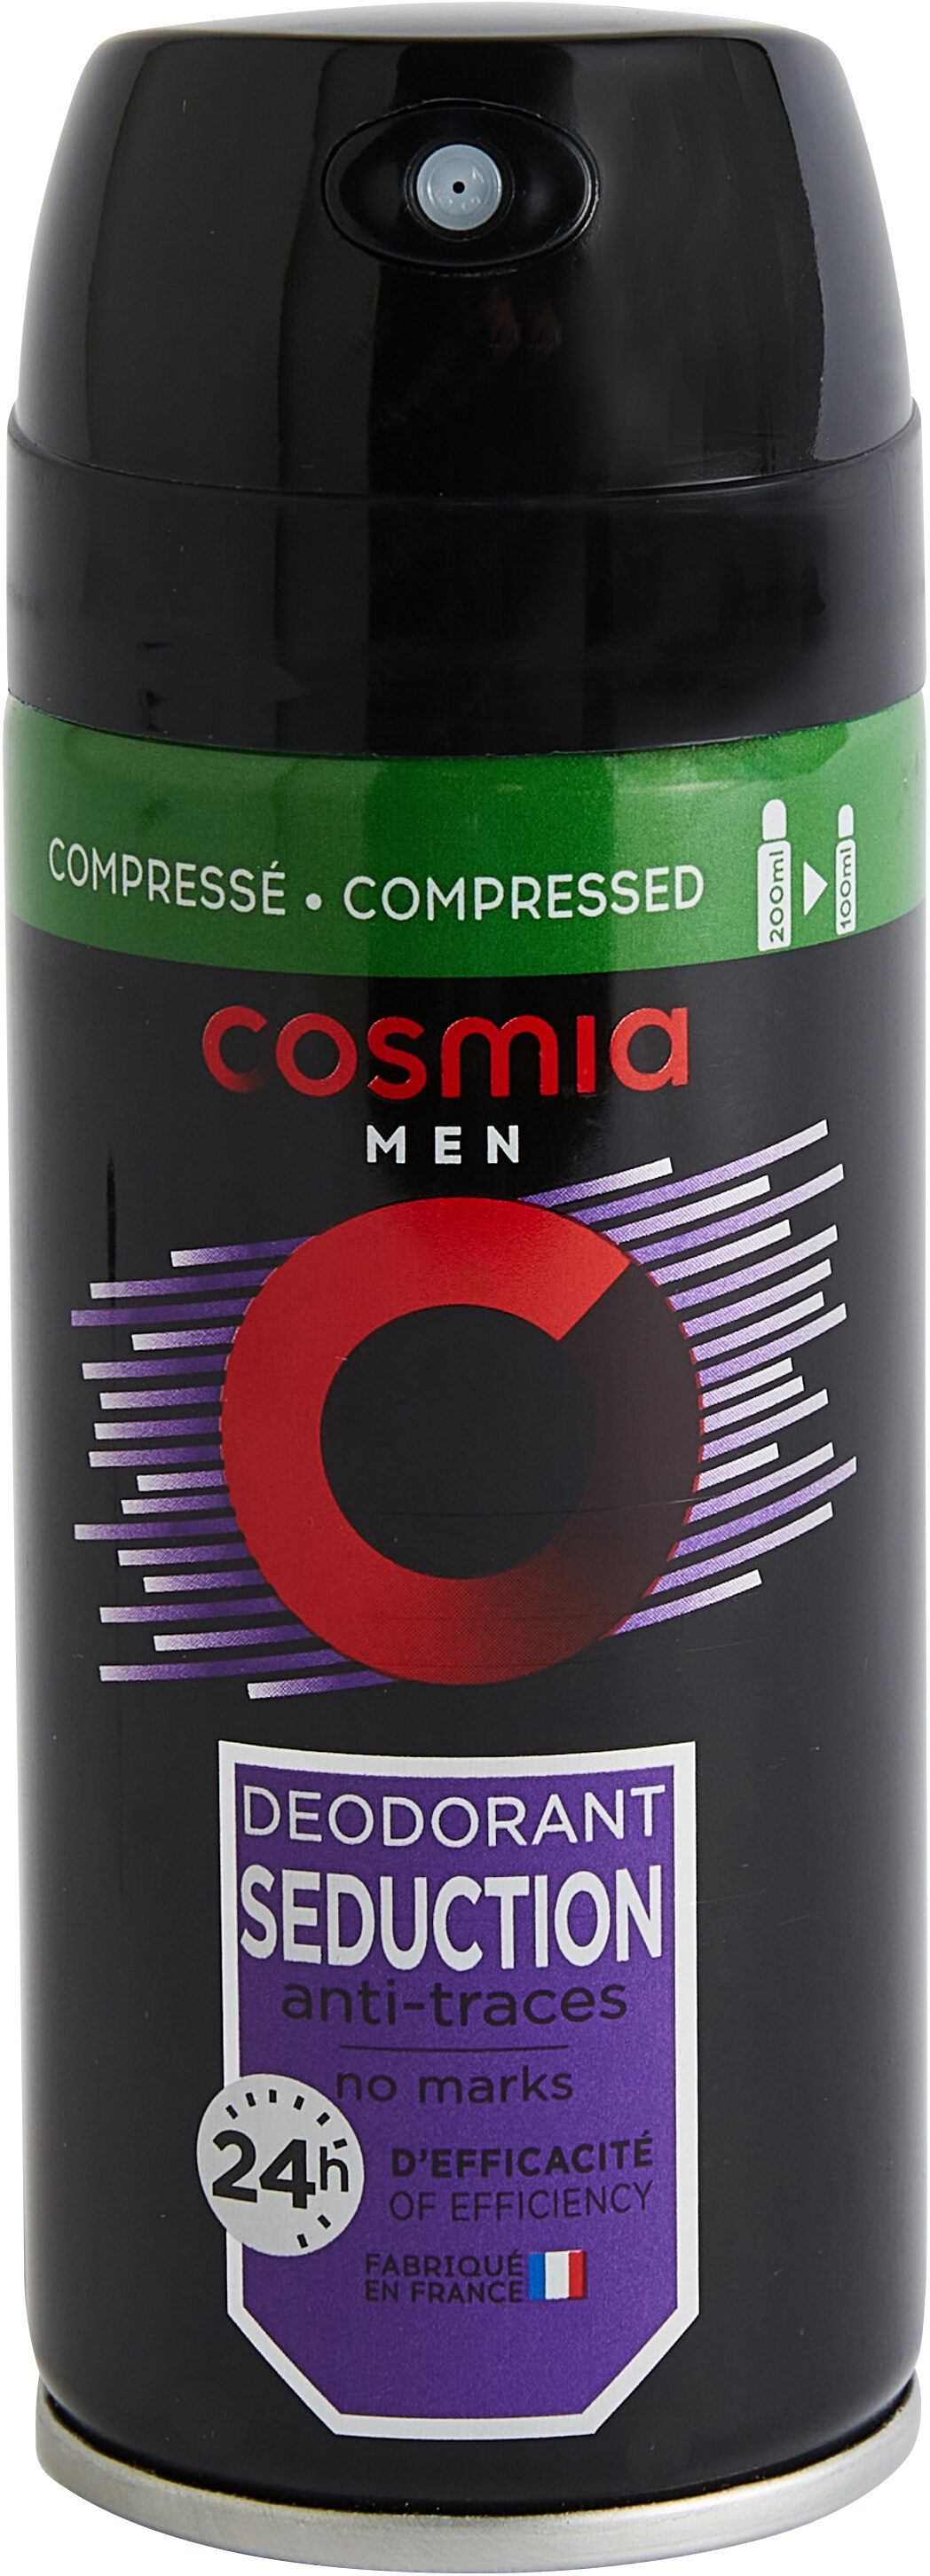 Déodorant compressé - Produkt - fr